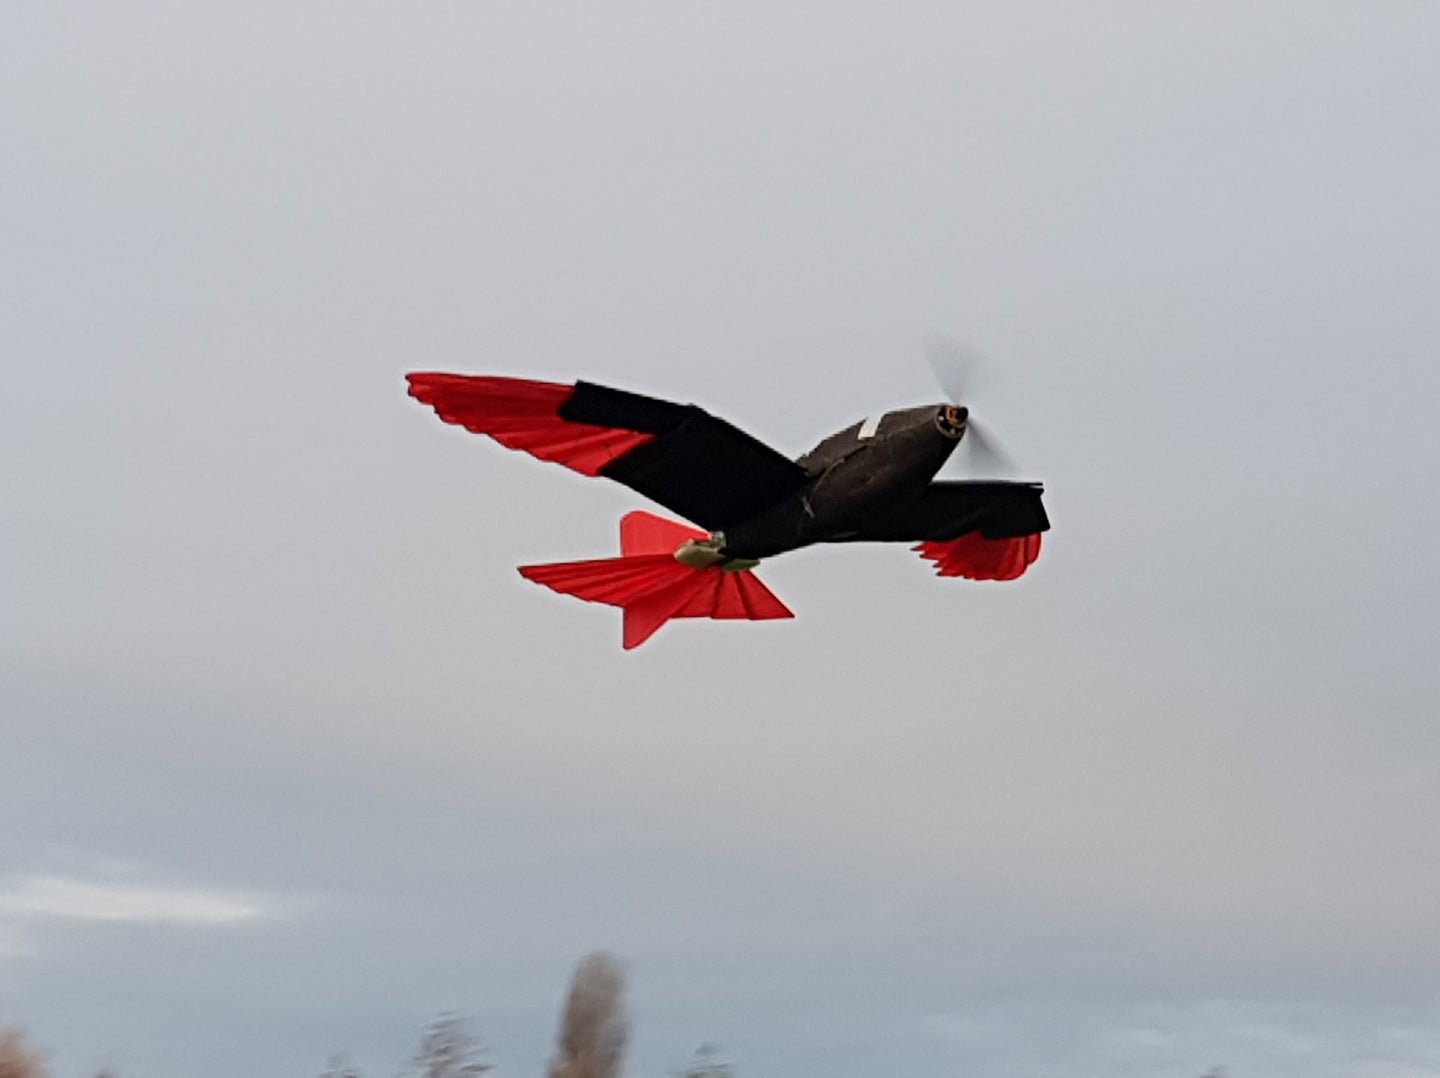 This robotic hawk can shape-shift as it flies